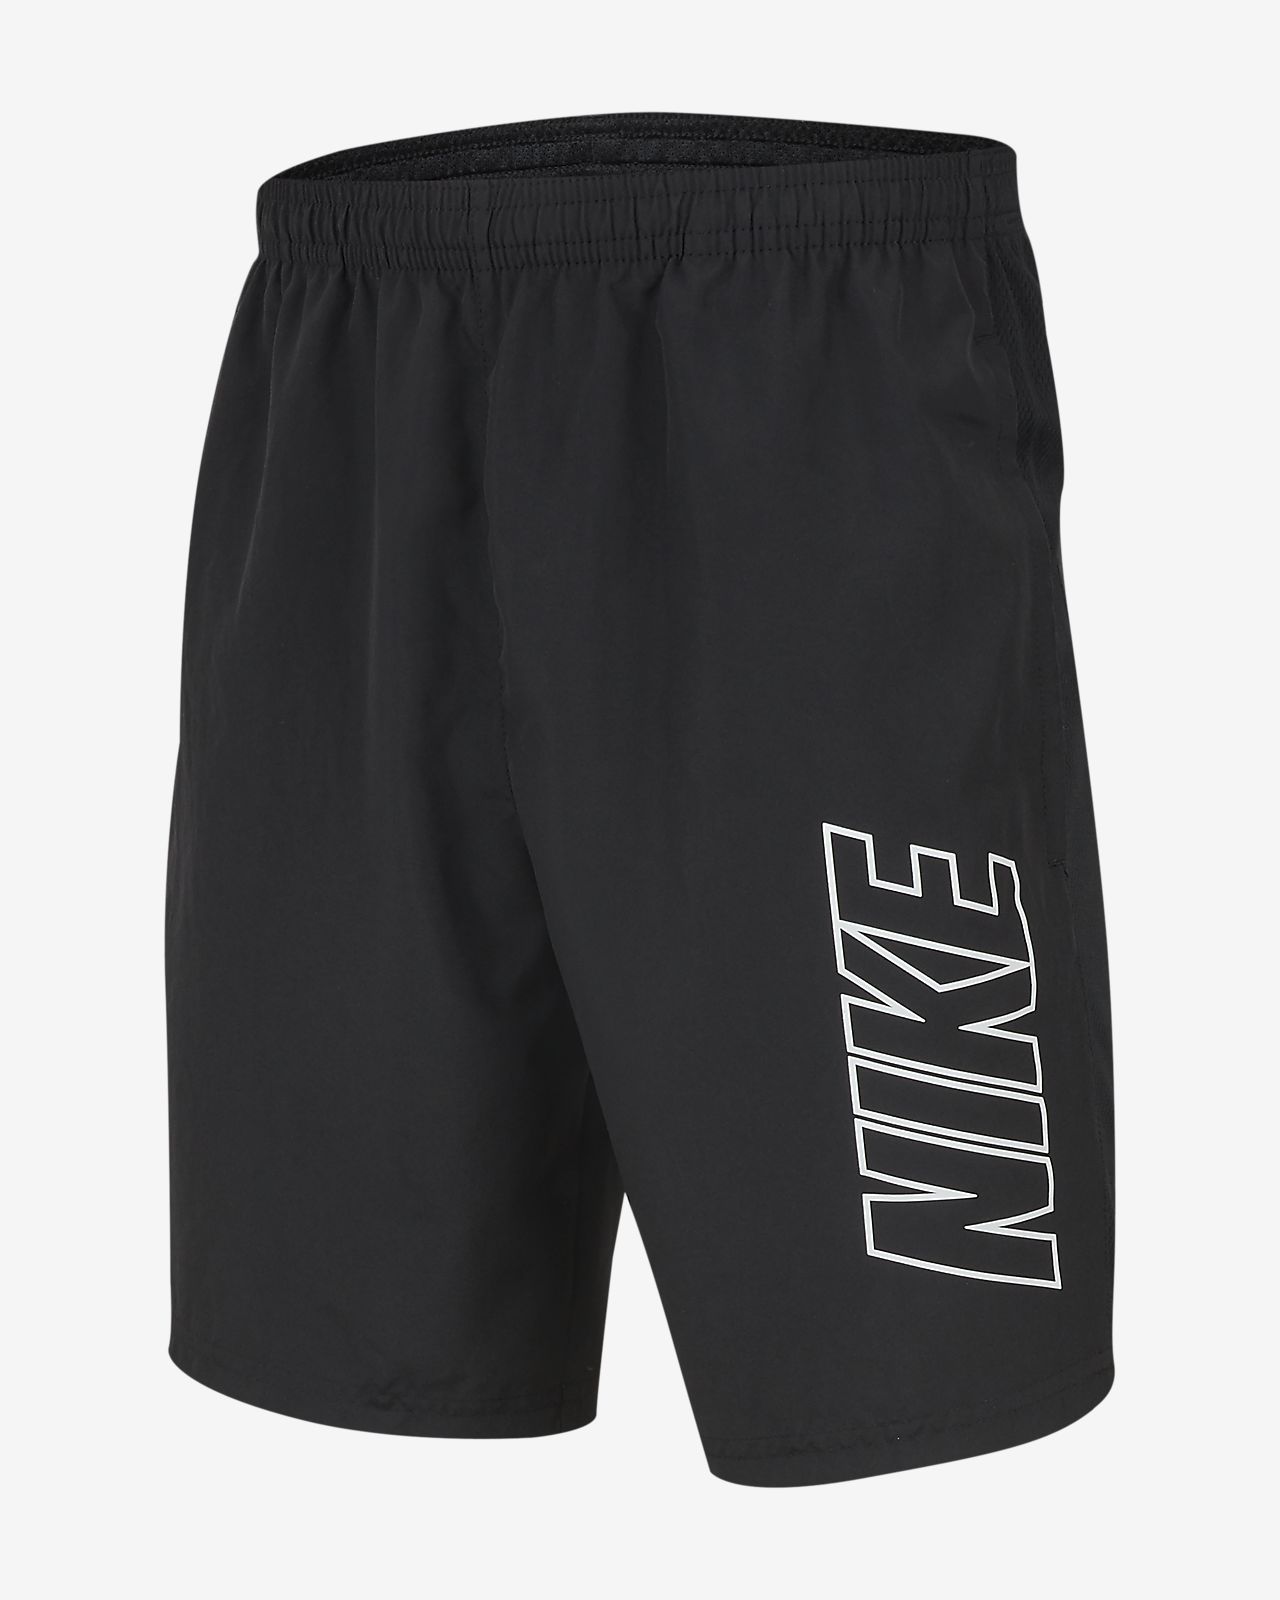 Nike Dri-fit Academy Older Kids' Football Shorts on Sale, 59% OFF 